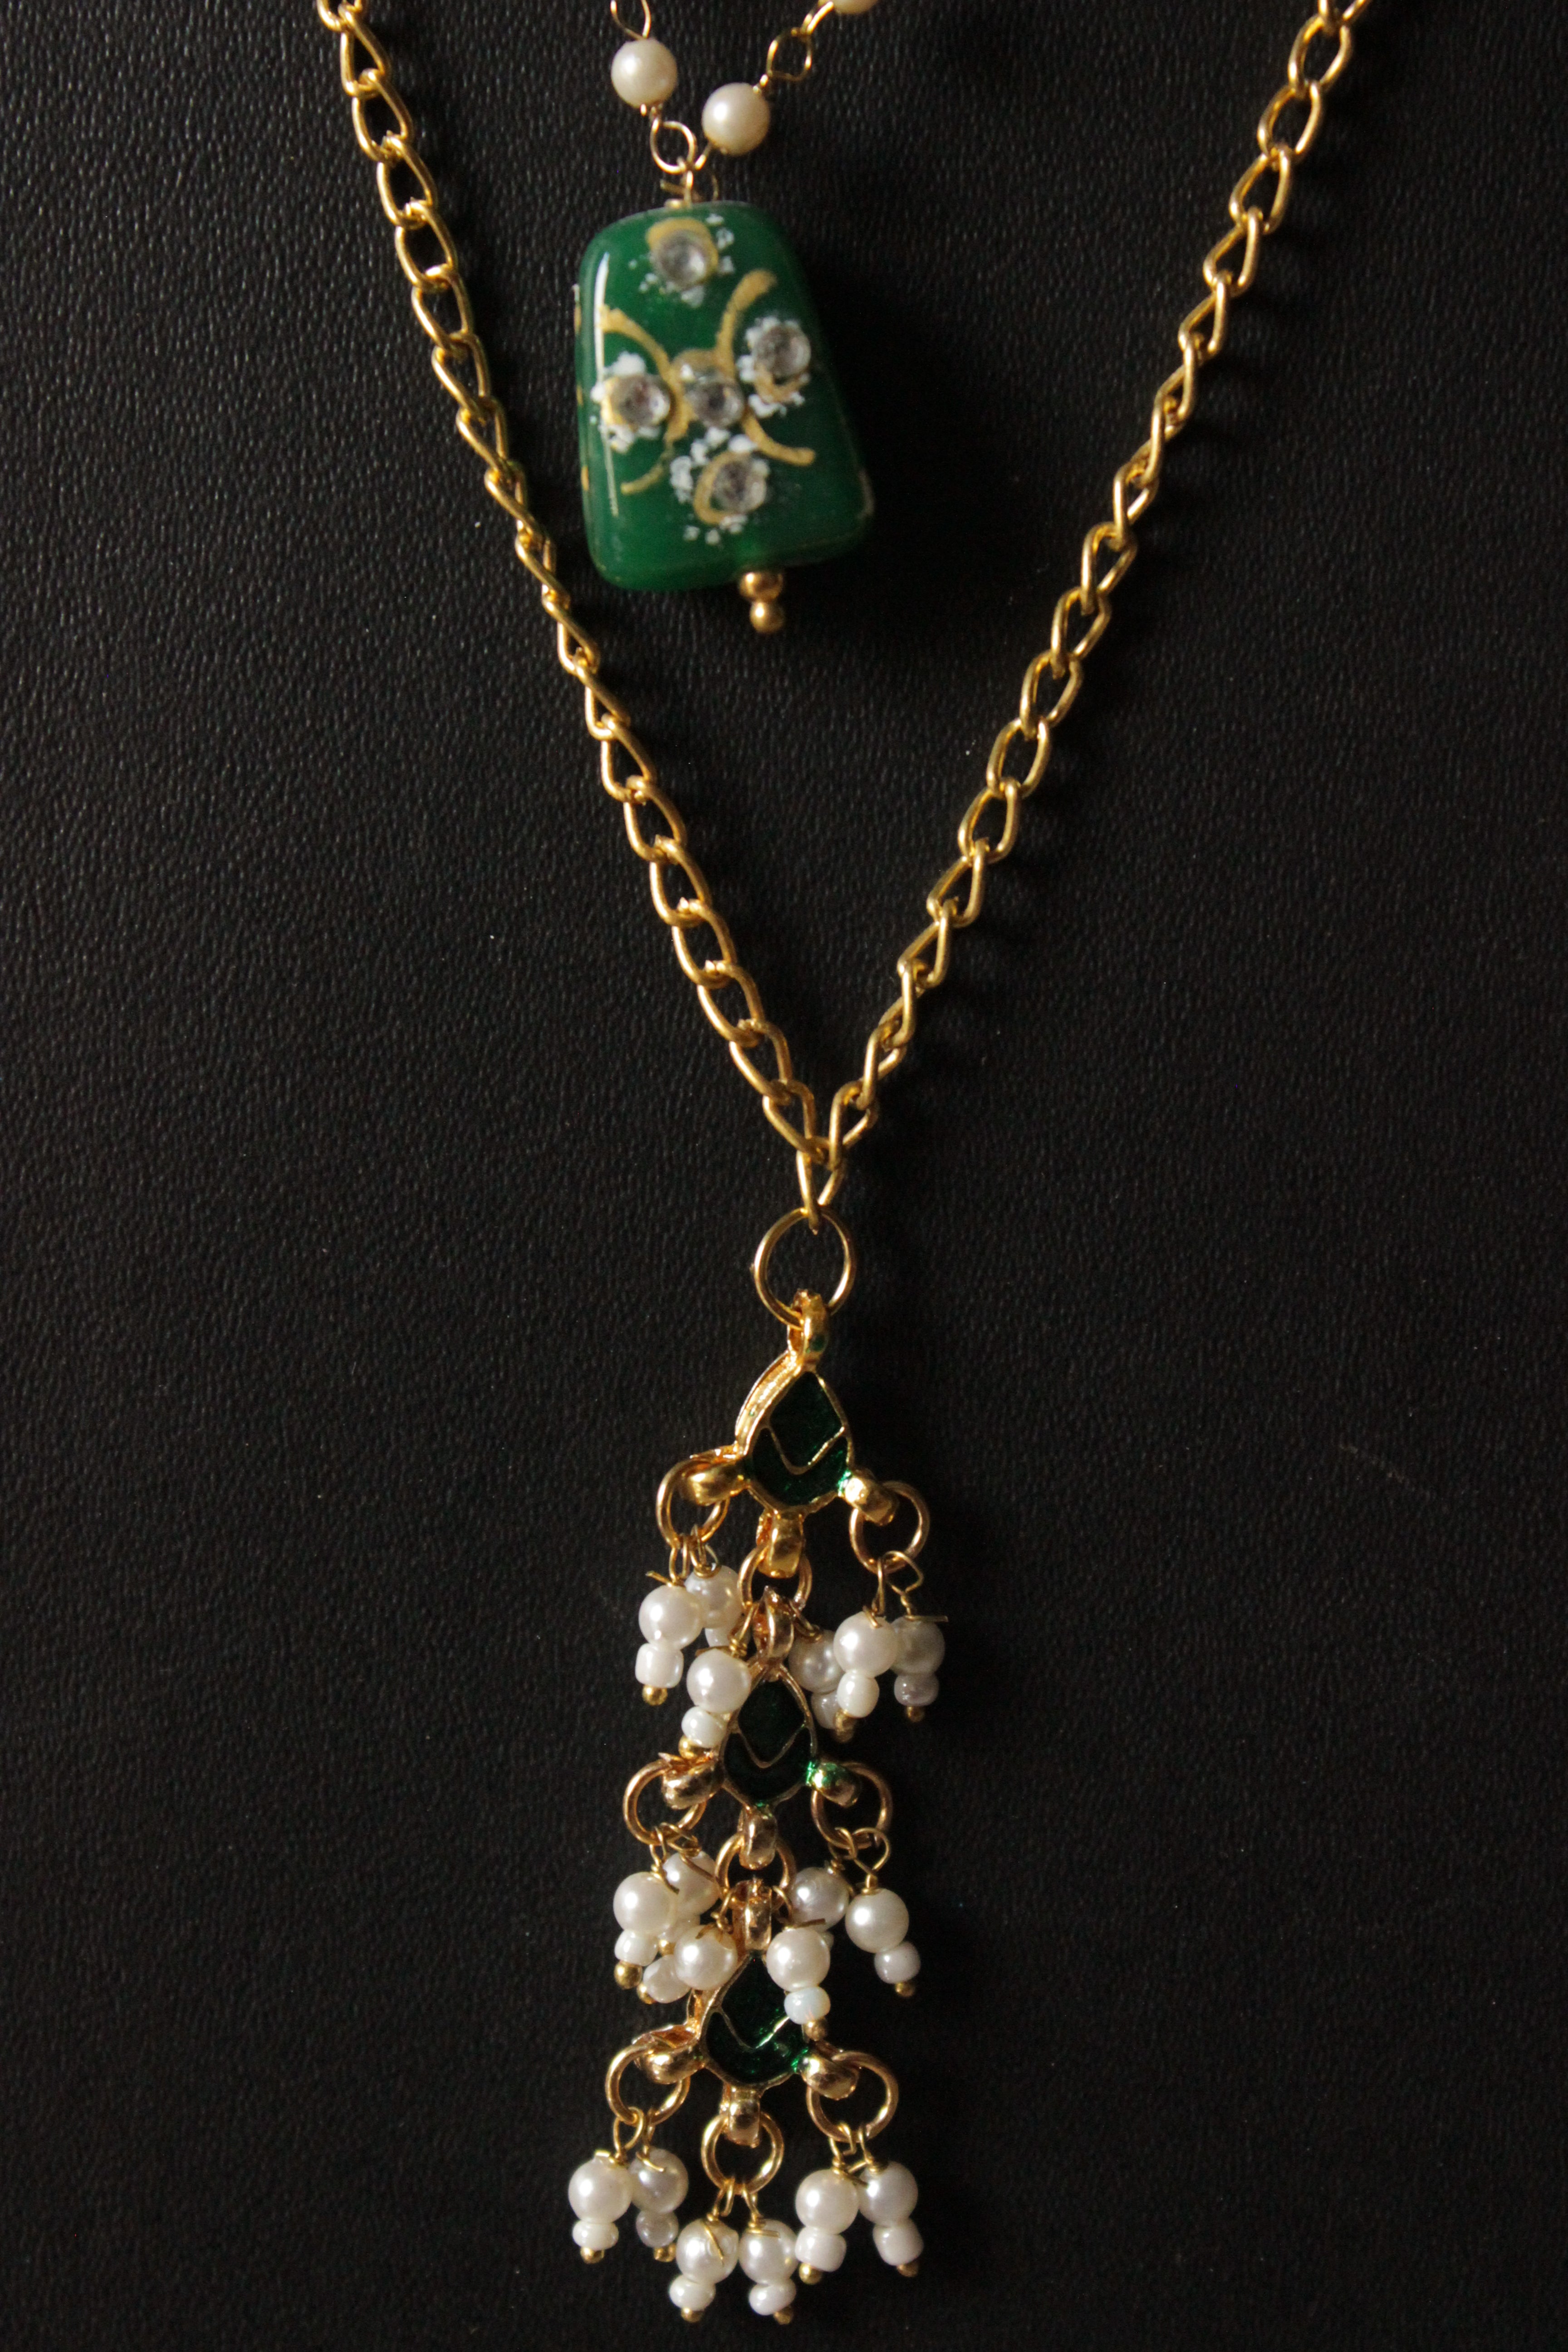 2 Layer Meenakari and Kundan Work Gold Toned Necklace